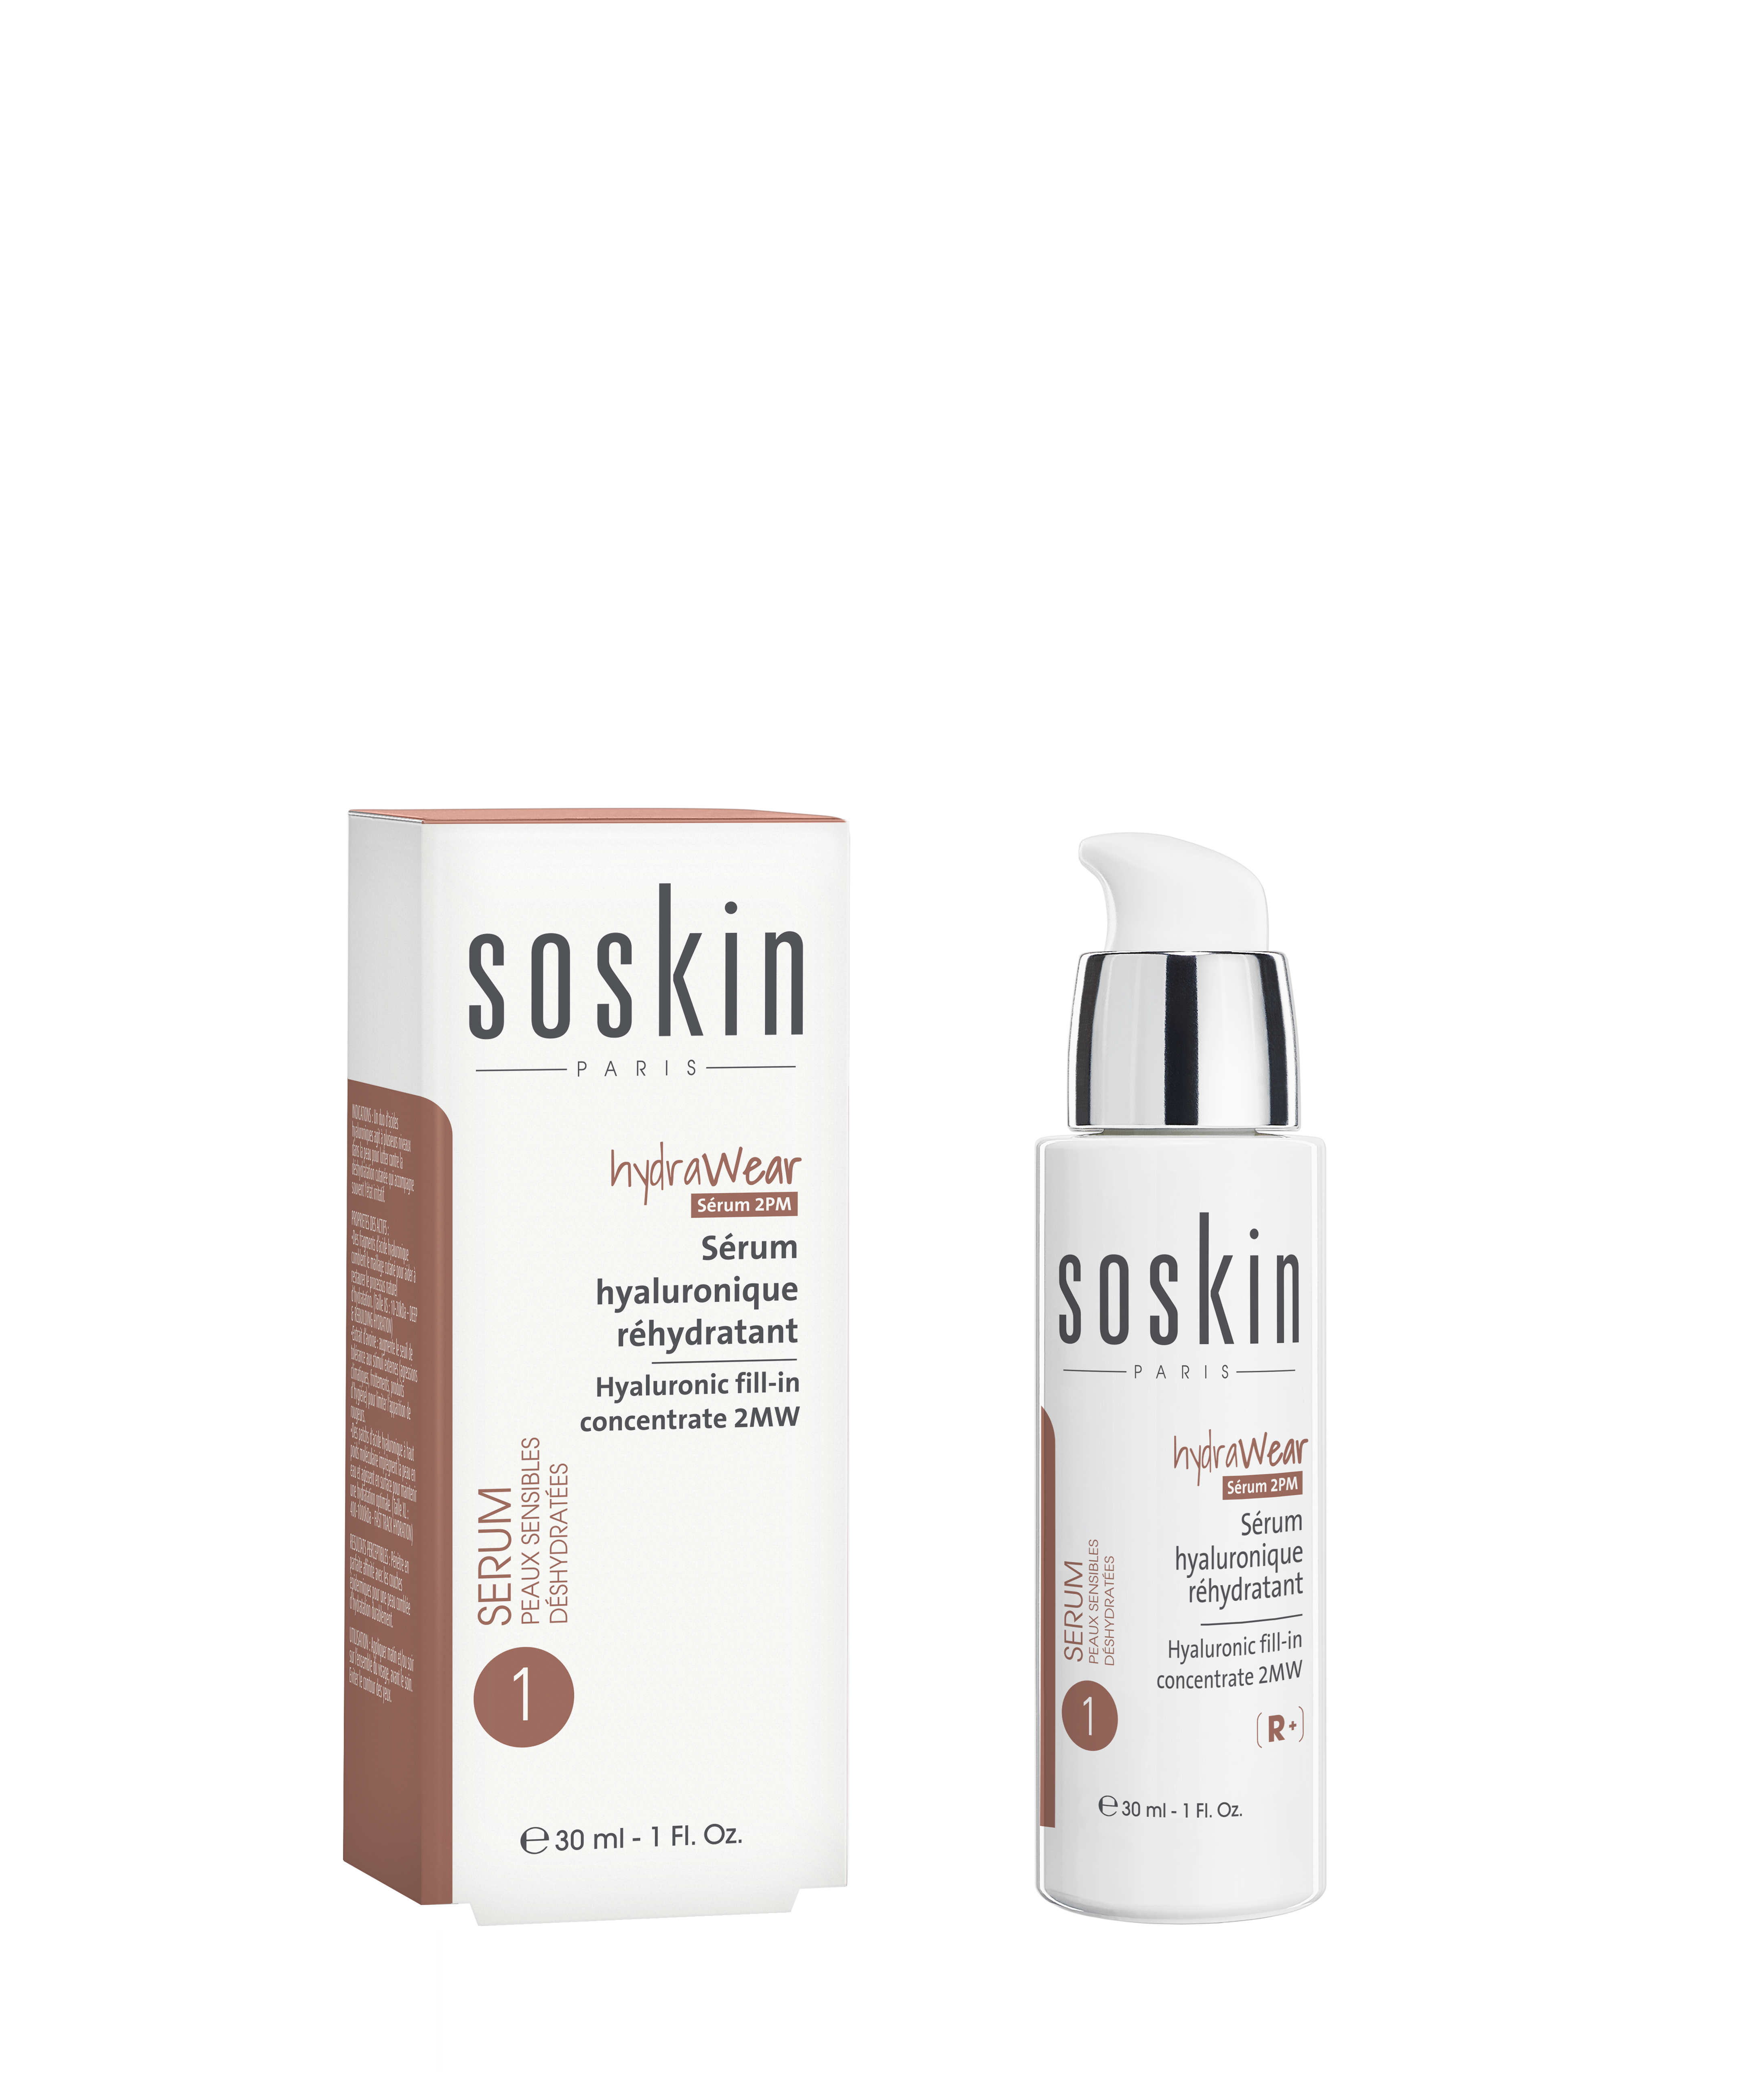 Soskin-Paris Hyaluronic Fill-In Concentrate - Serum s Kyselinou Hyaluronovou  30 ml